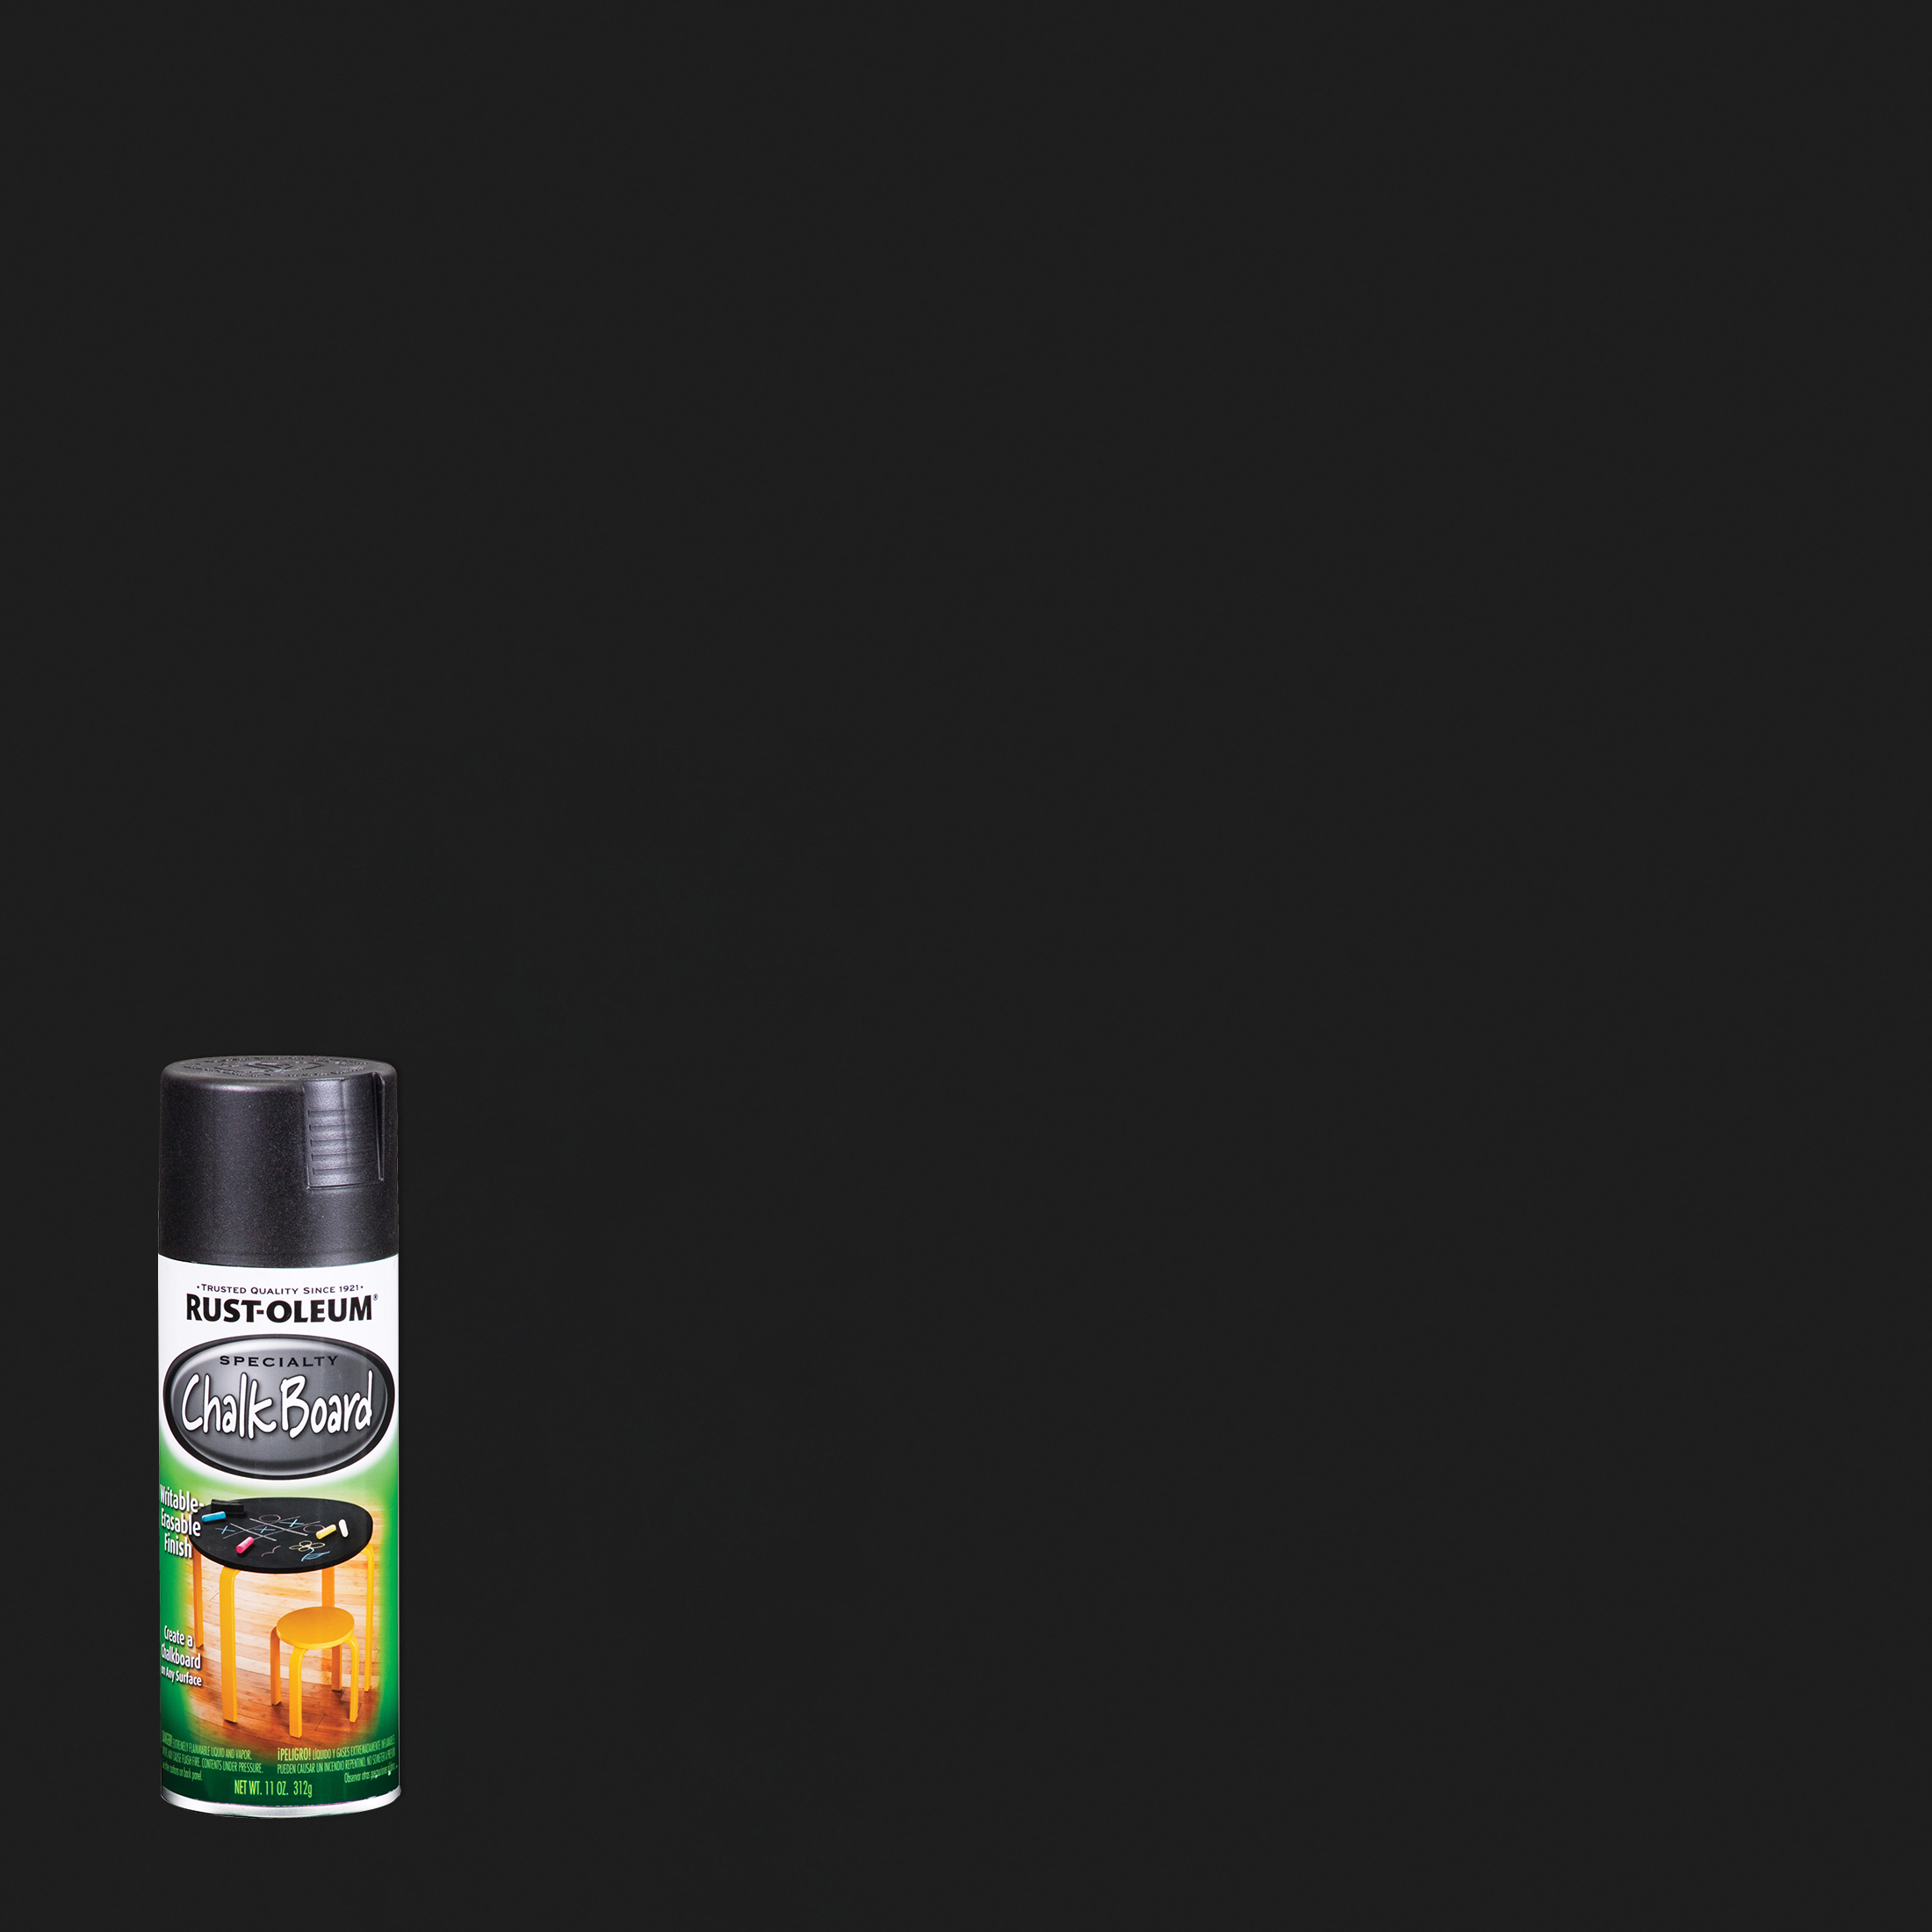 Black, Rust-Oleum Specialty Flat Chalkboard Spray, 11 Oz - image 1 of 6